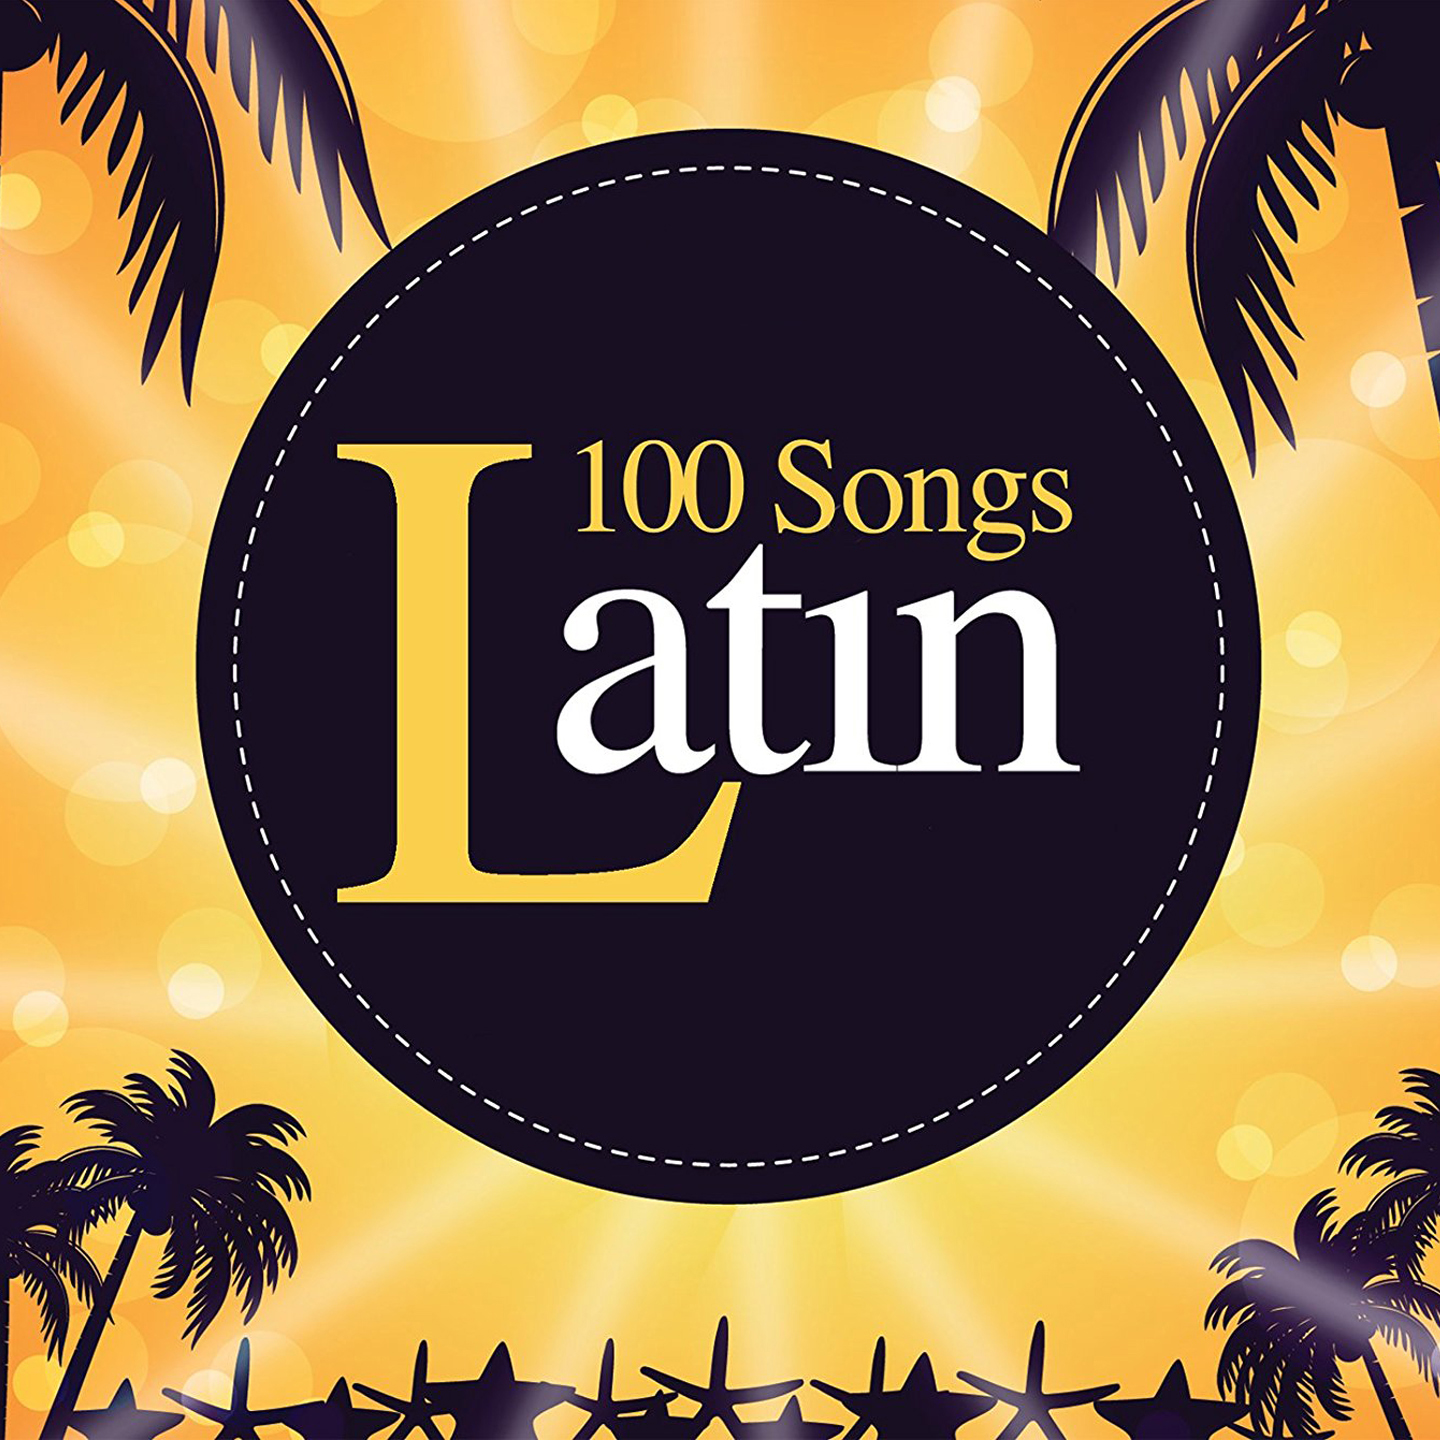 100 Songs Latin